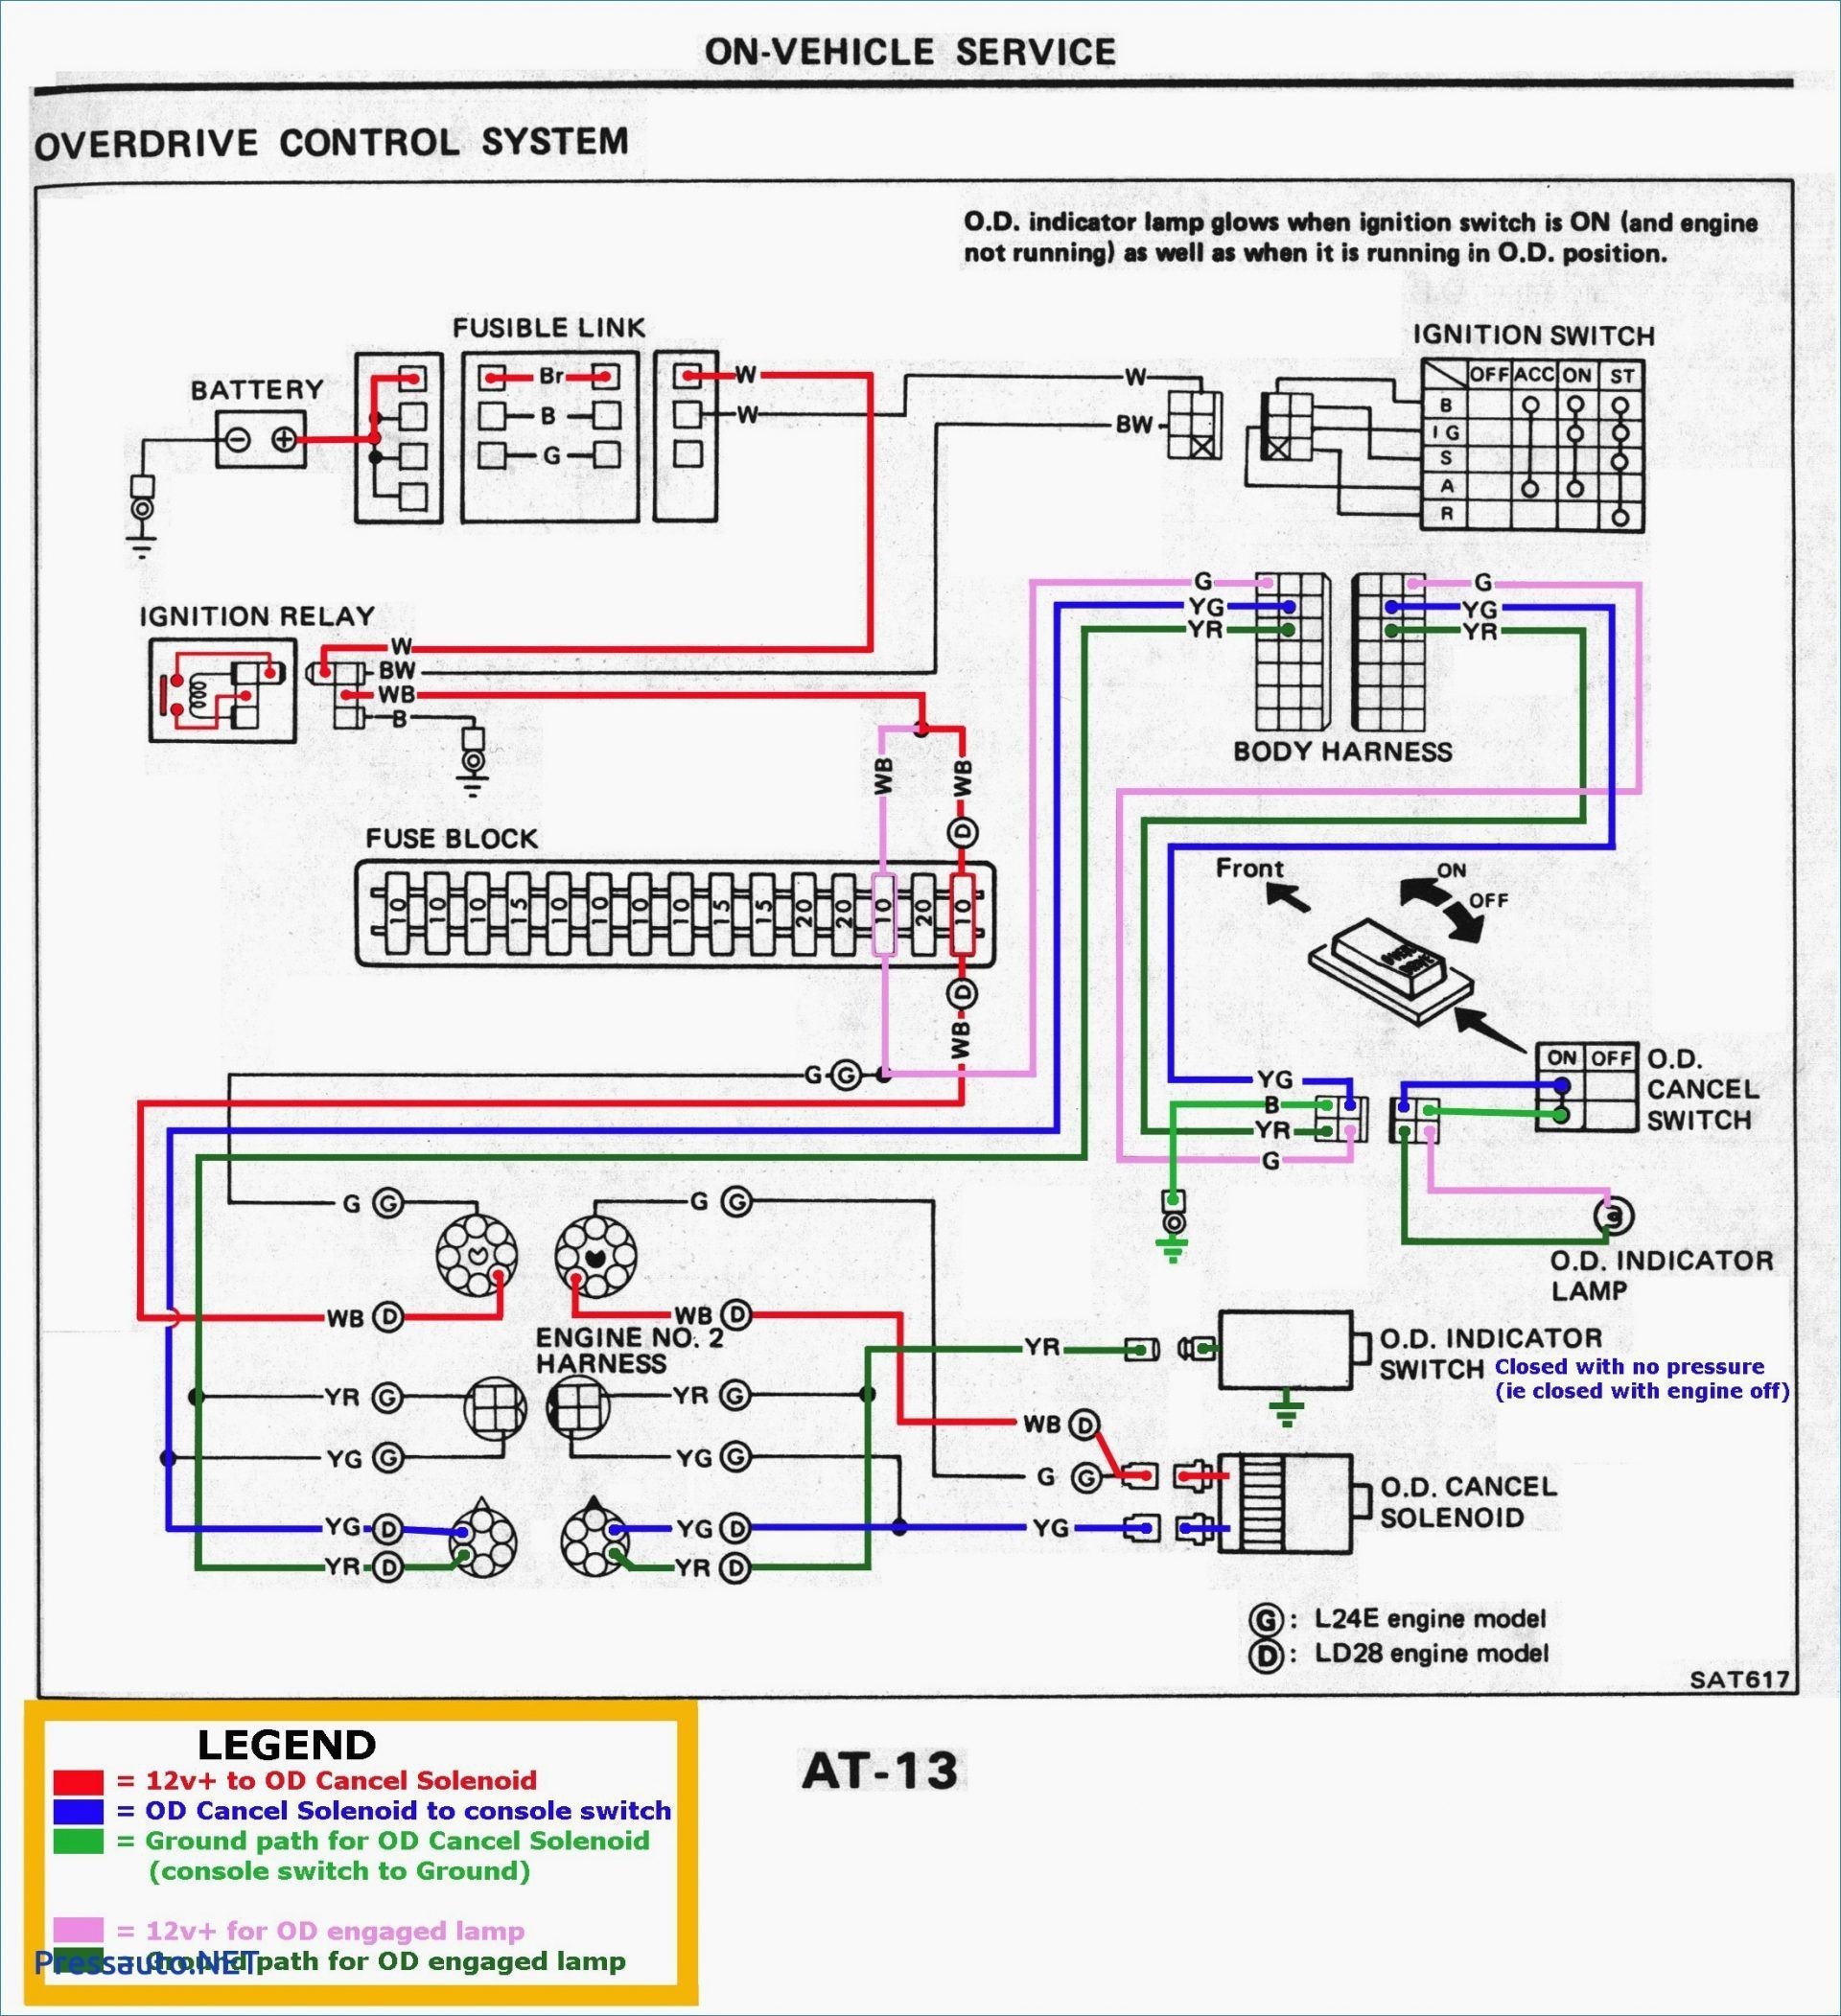 Water Cooled Engine Diagram Vauxhall Zafira Engine Diagram Wiring Diagrams Konsult Of Water Cooled Engine Diagram